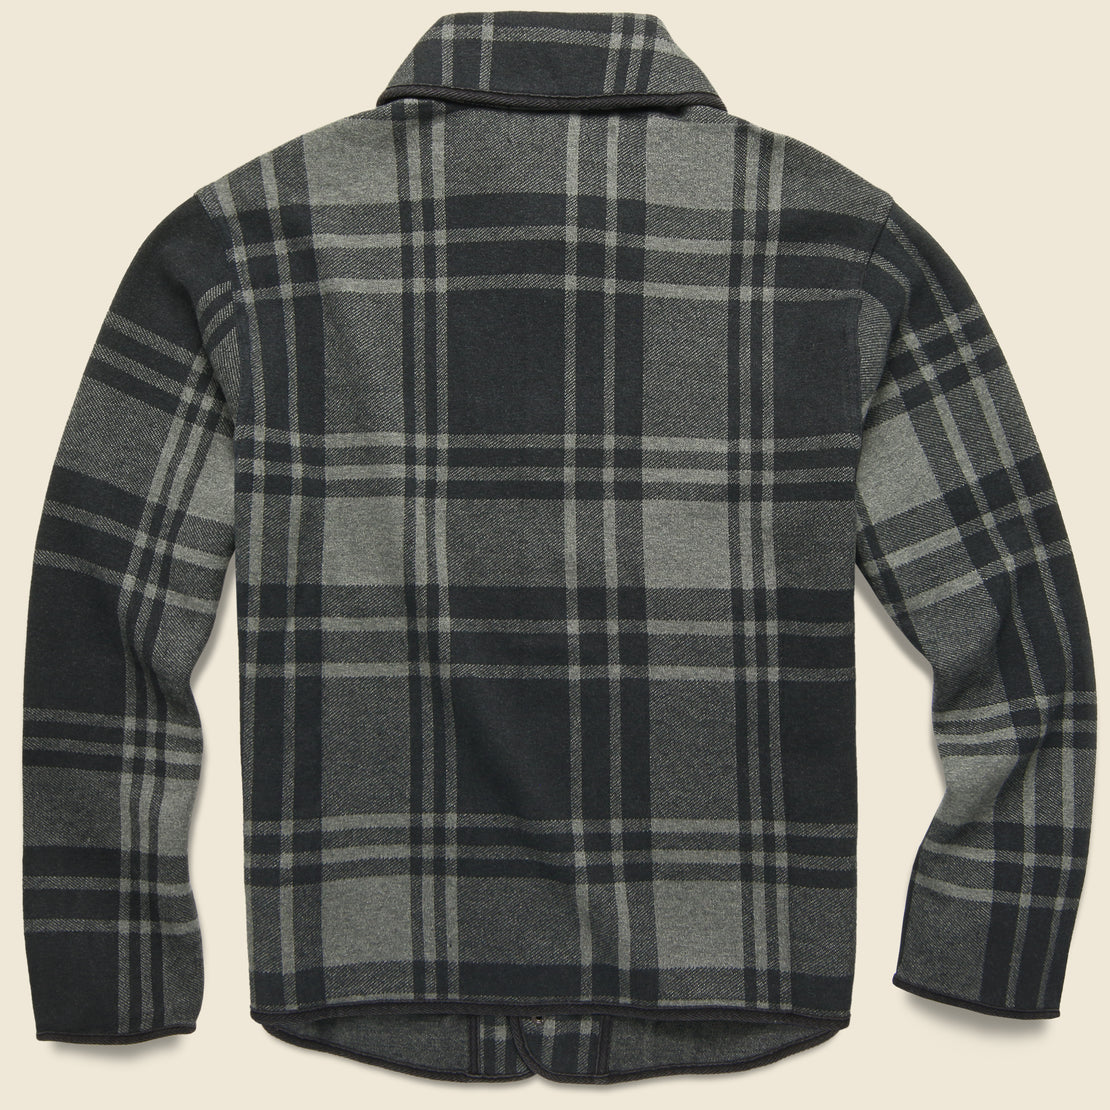 Plaid Knit Jacquard Jacket - Black/Charcoal - RRL - STAG Provisions - Tops - Sweater